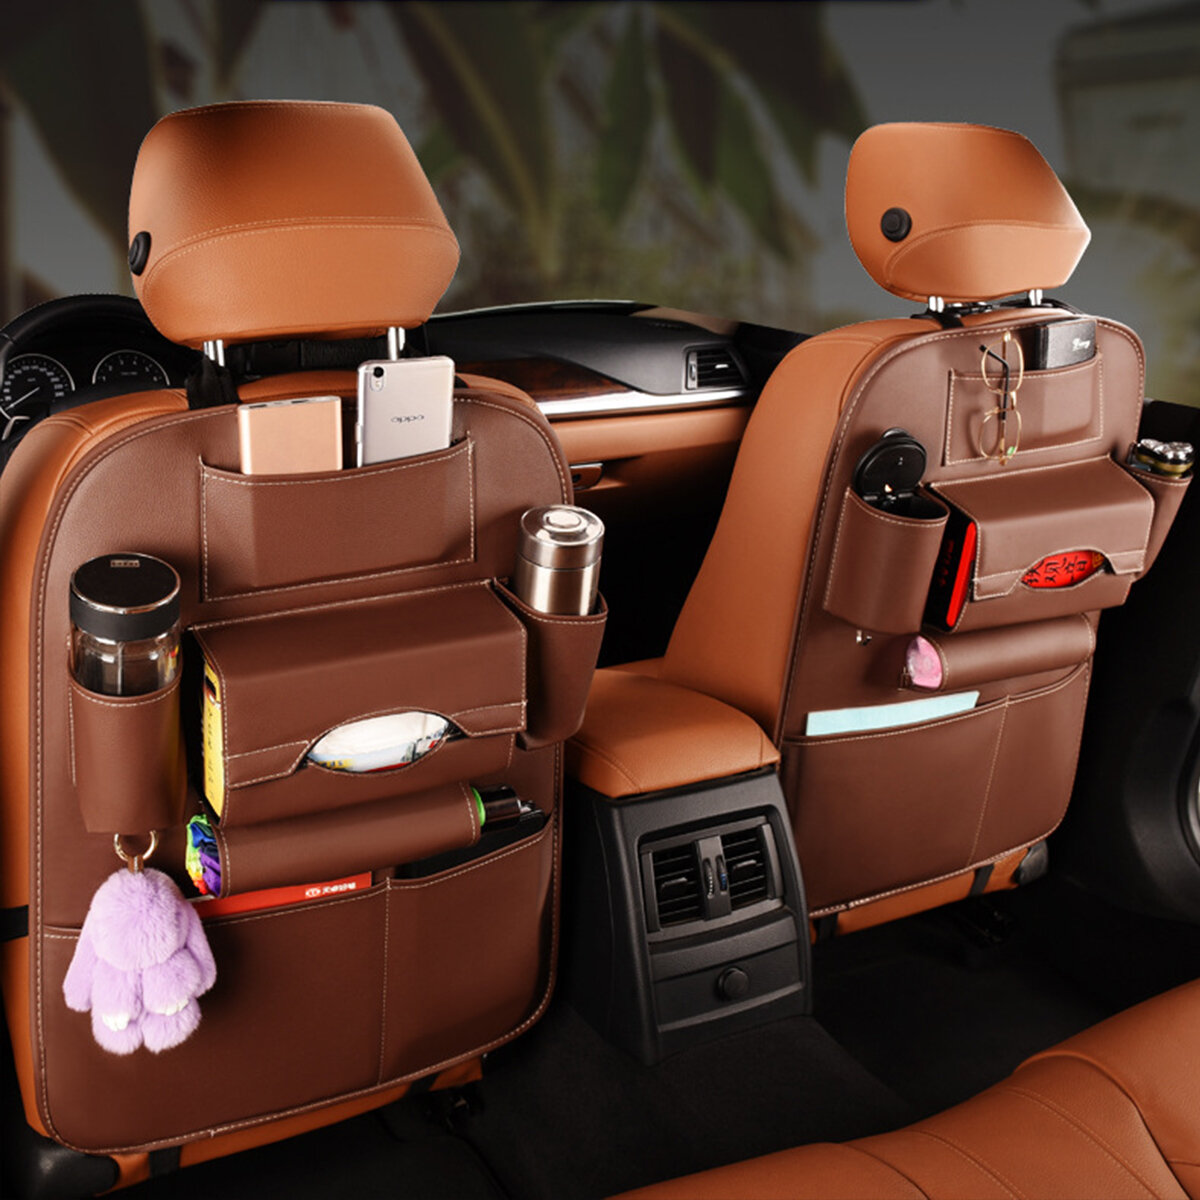 1Pcs حقيبة السيارة المقعد الخلفي المنظم متعدد الوظائف وجيب التخزين حقيبة حامل جلدية